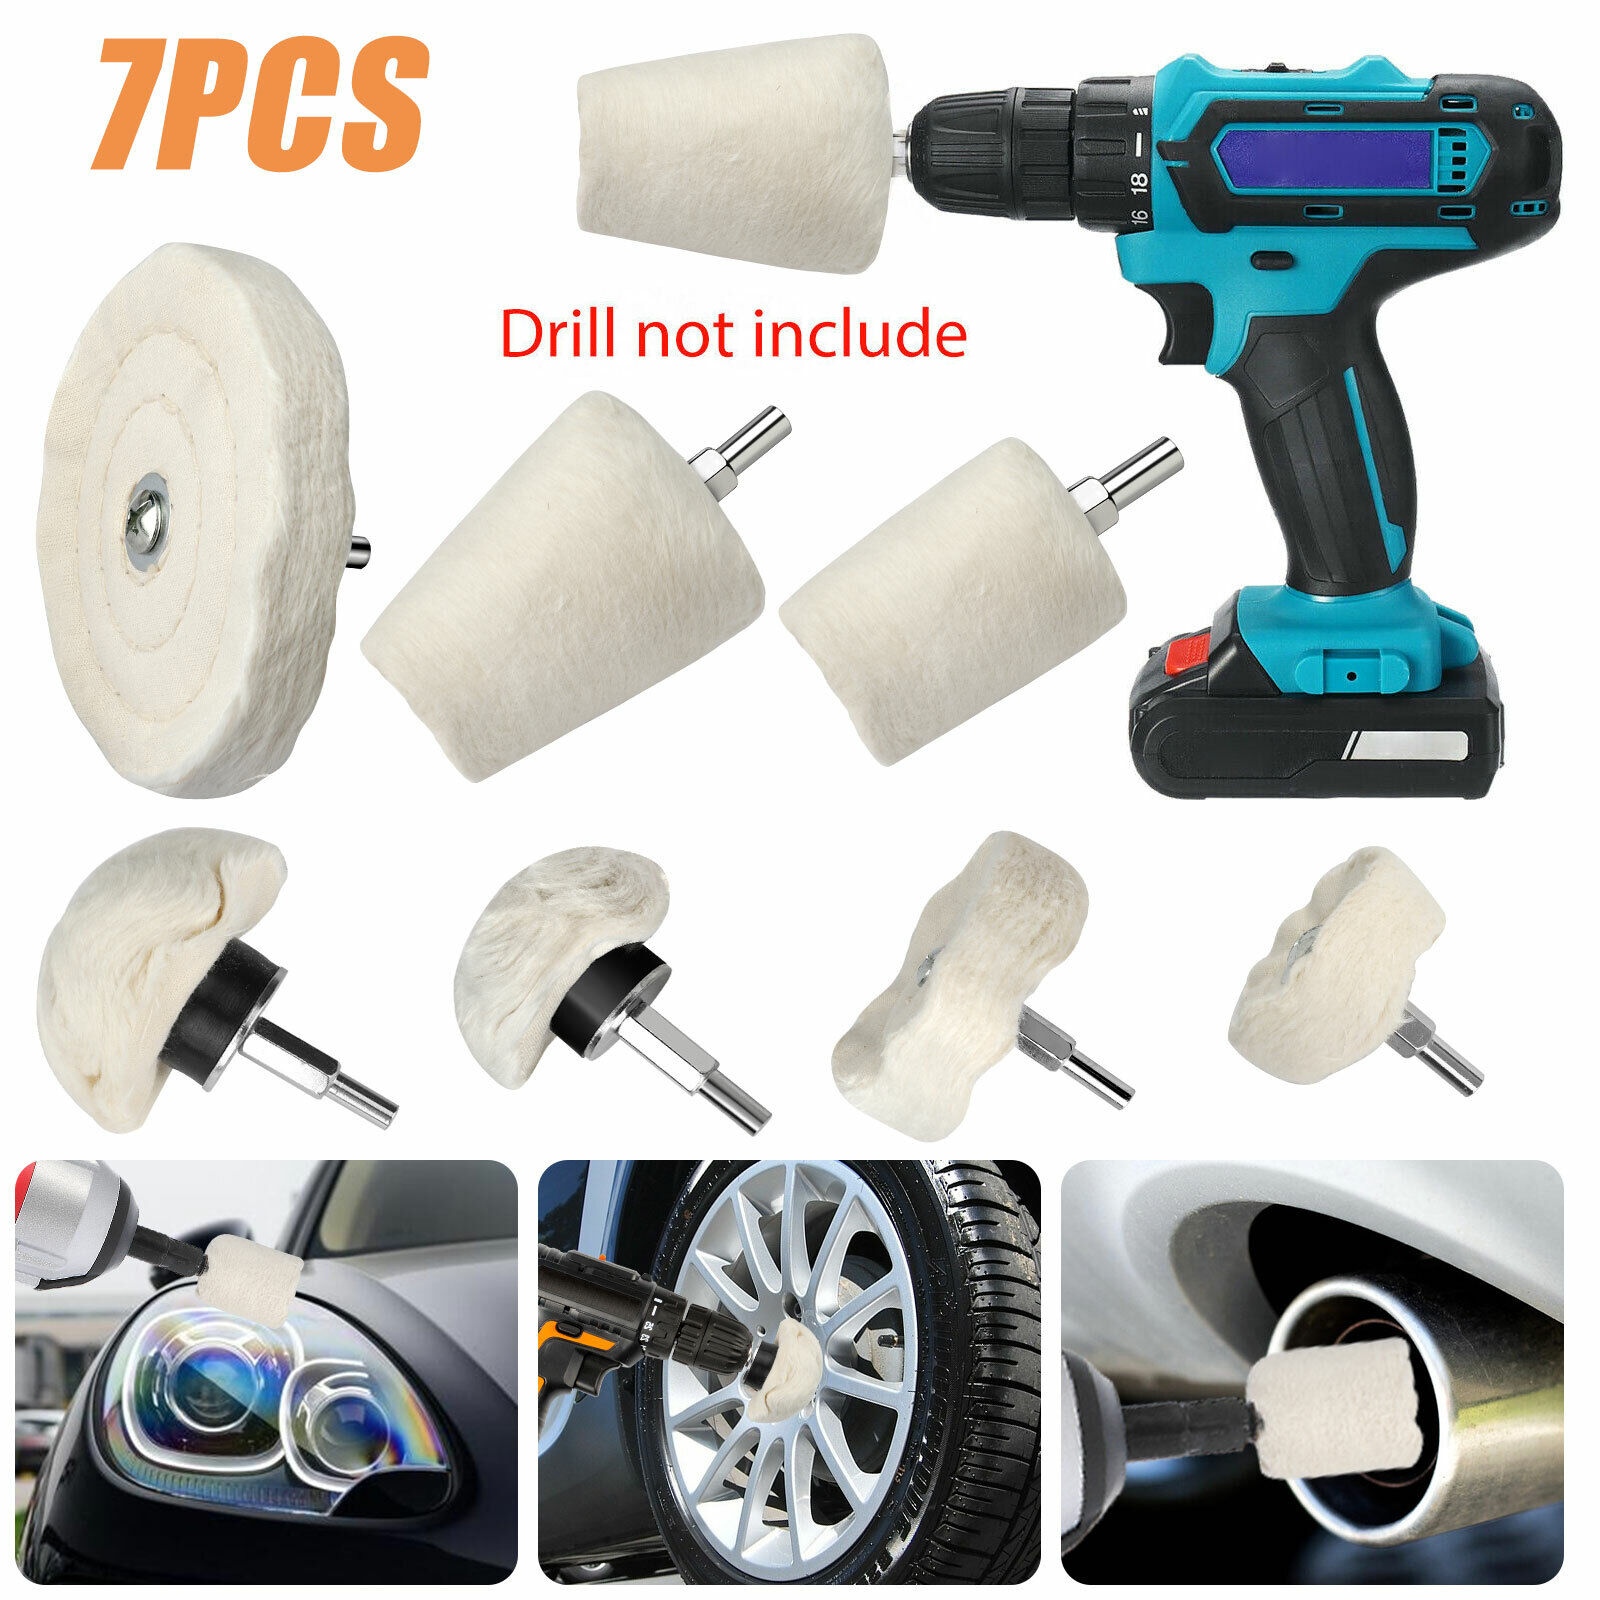 7PCS Car Polisher Polishing Buffing Pads Mop Wheel Drill Kit Aluminum Stainless